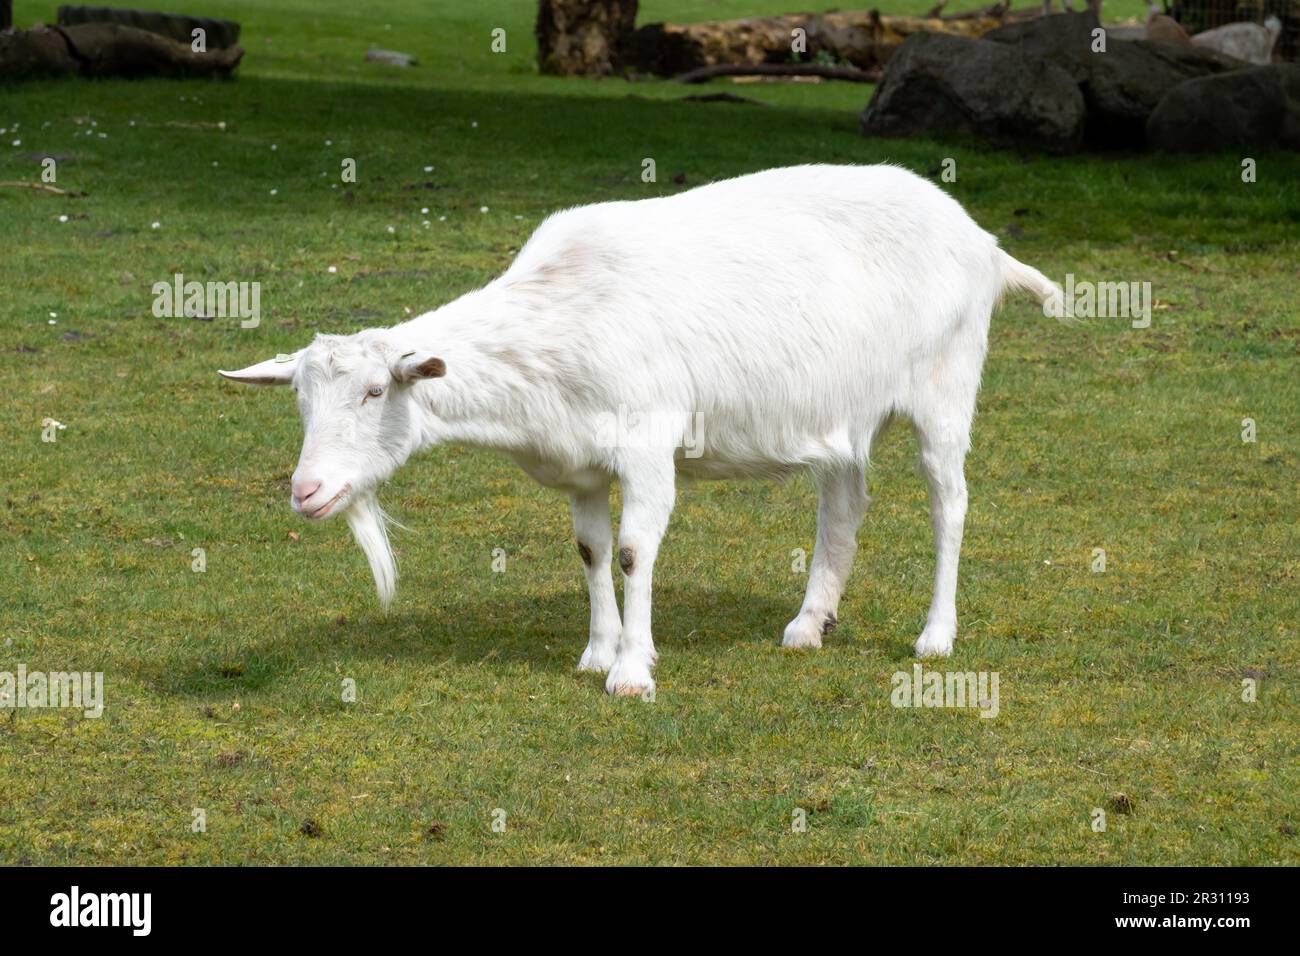 White milk goat or Dutch white goat, Capra aegagrus hircus, portrait of goat standing in meadow, Netherlands Stock Photo